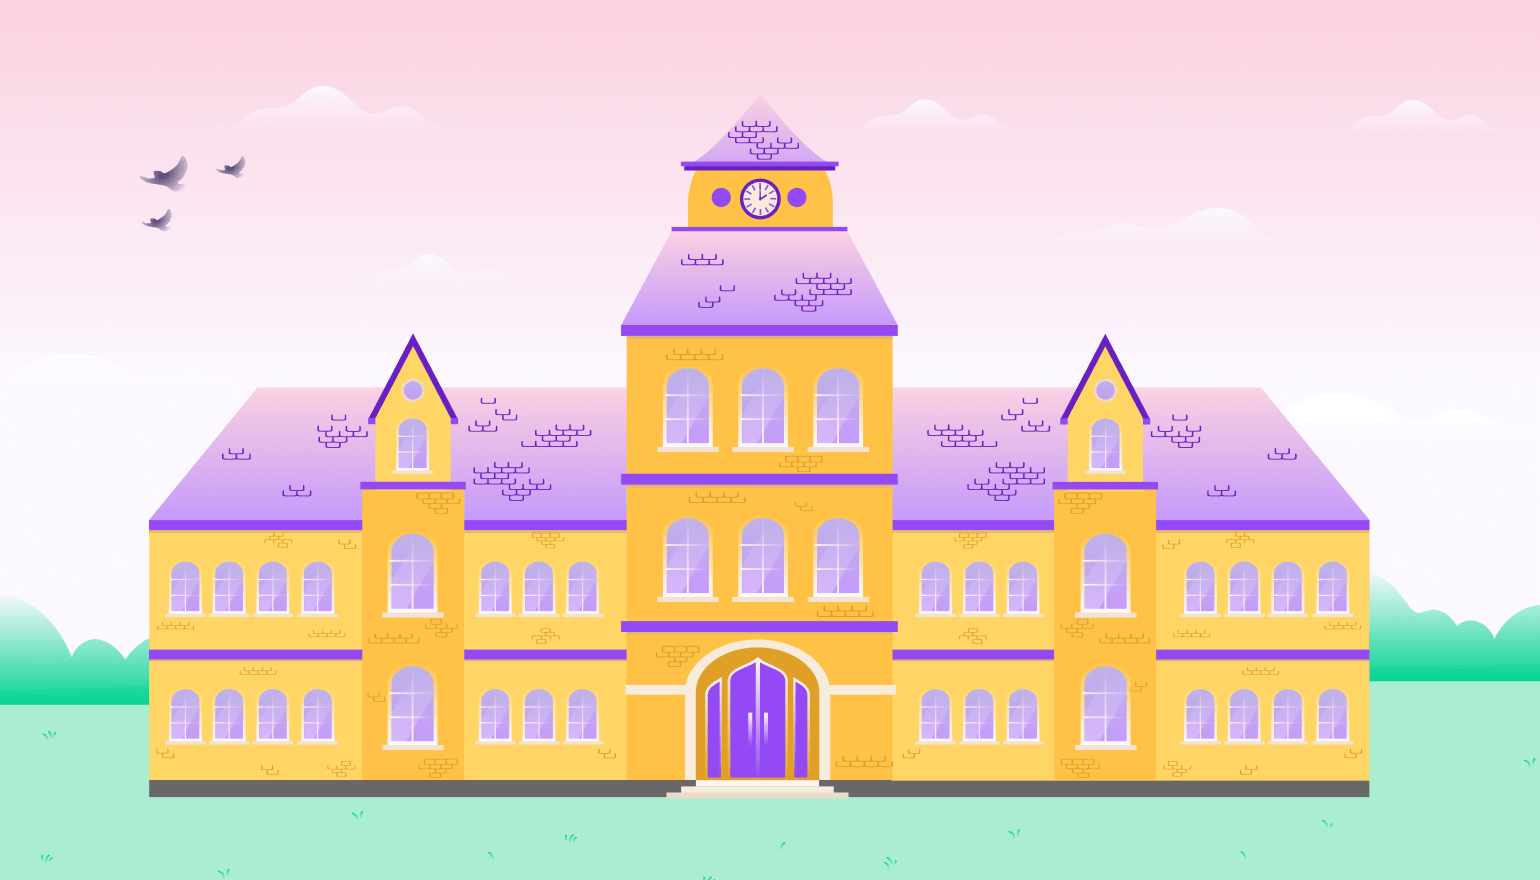 Illustration of a school campus